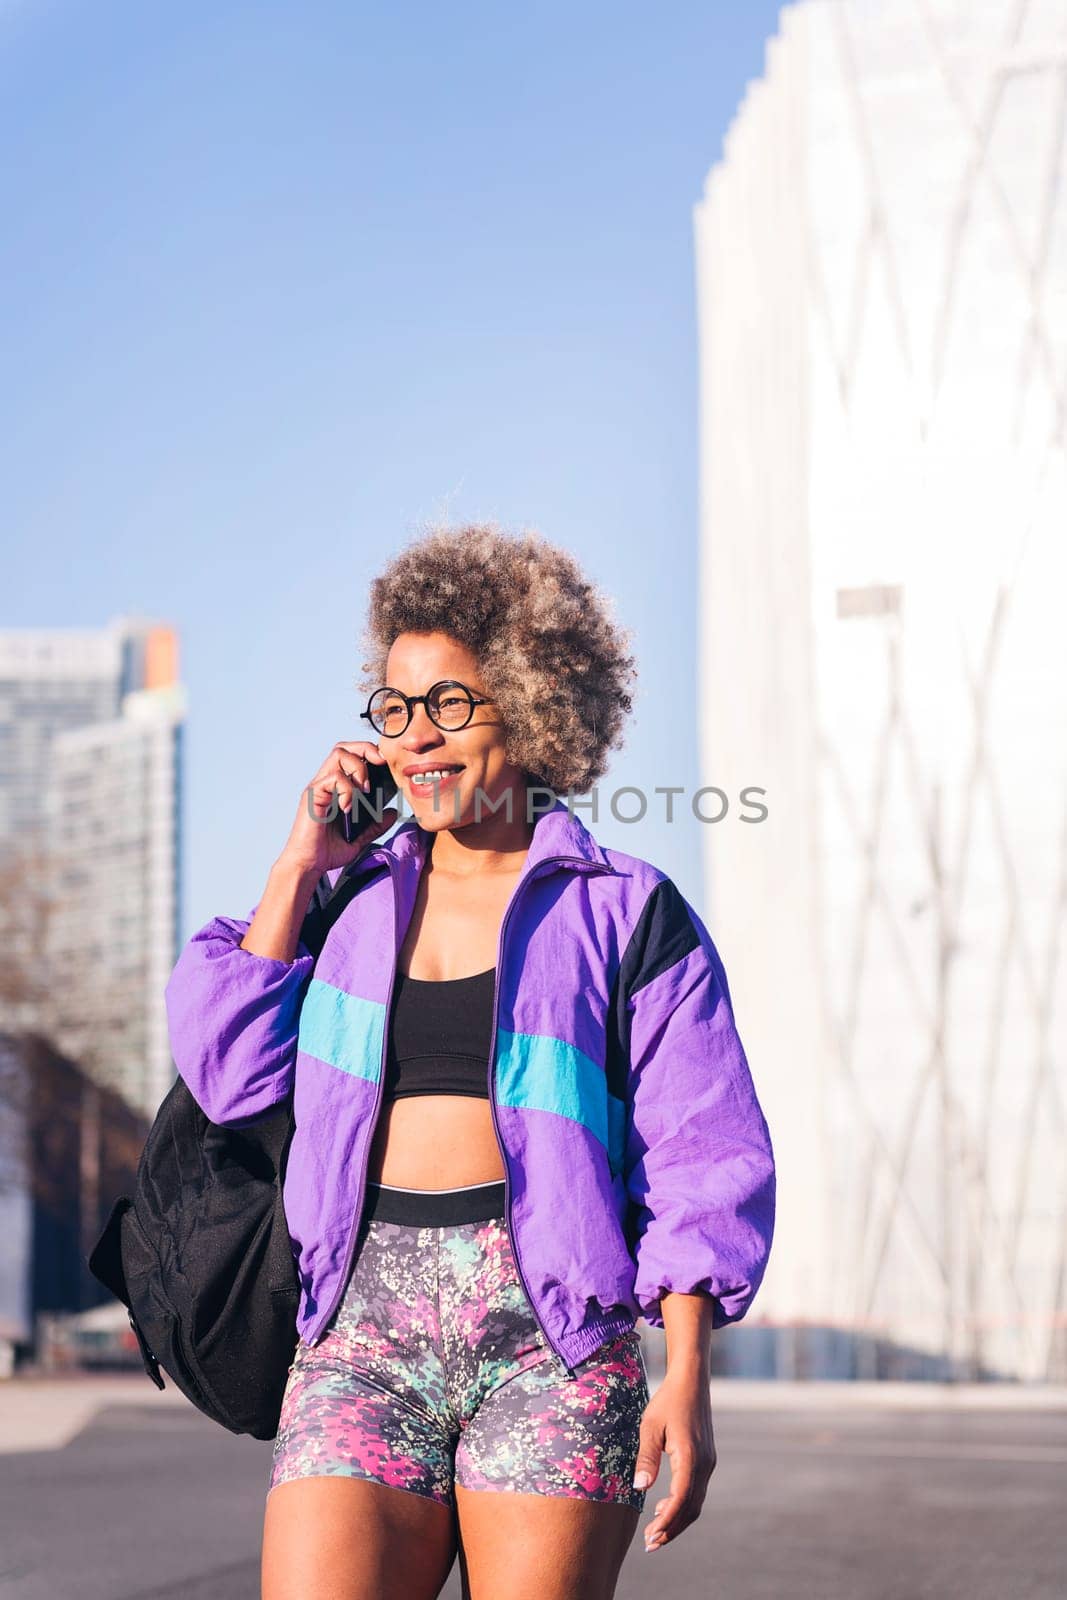 woman in sportswear talking by phone in the city by raulmelldo